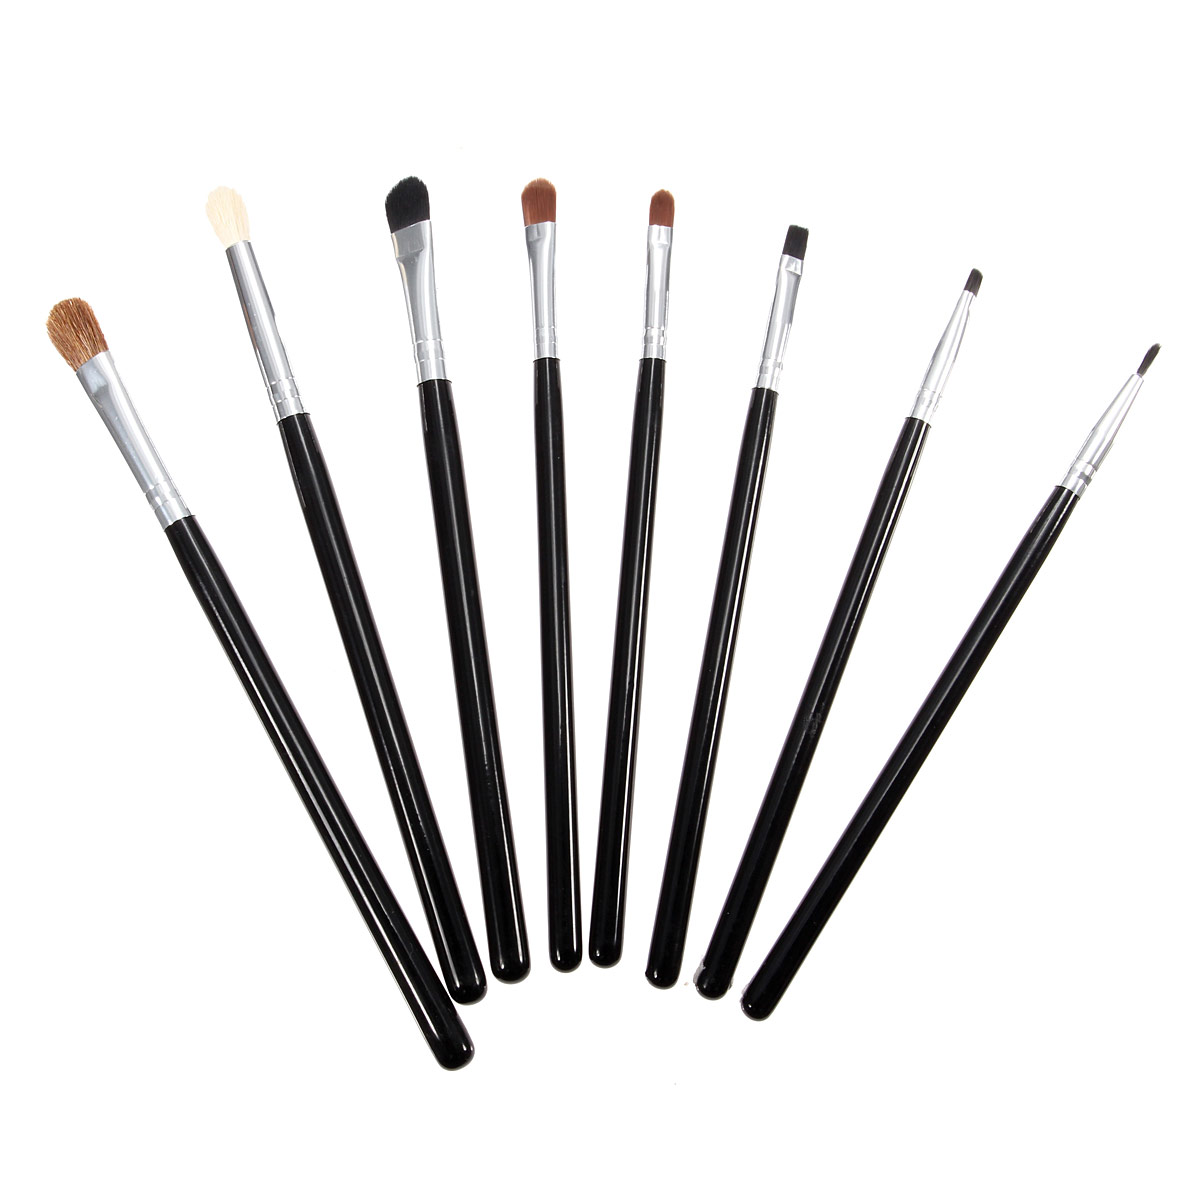 Pro 8Pcs Set Eye Brushes Eyeshadow Eye Liner Makeup Blending Pens Cosmetics Brush Beauty Tools